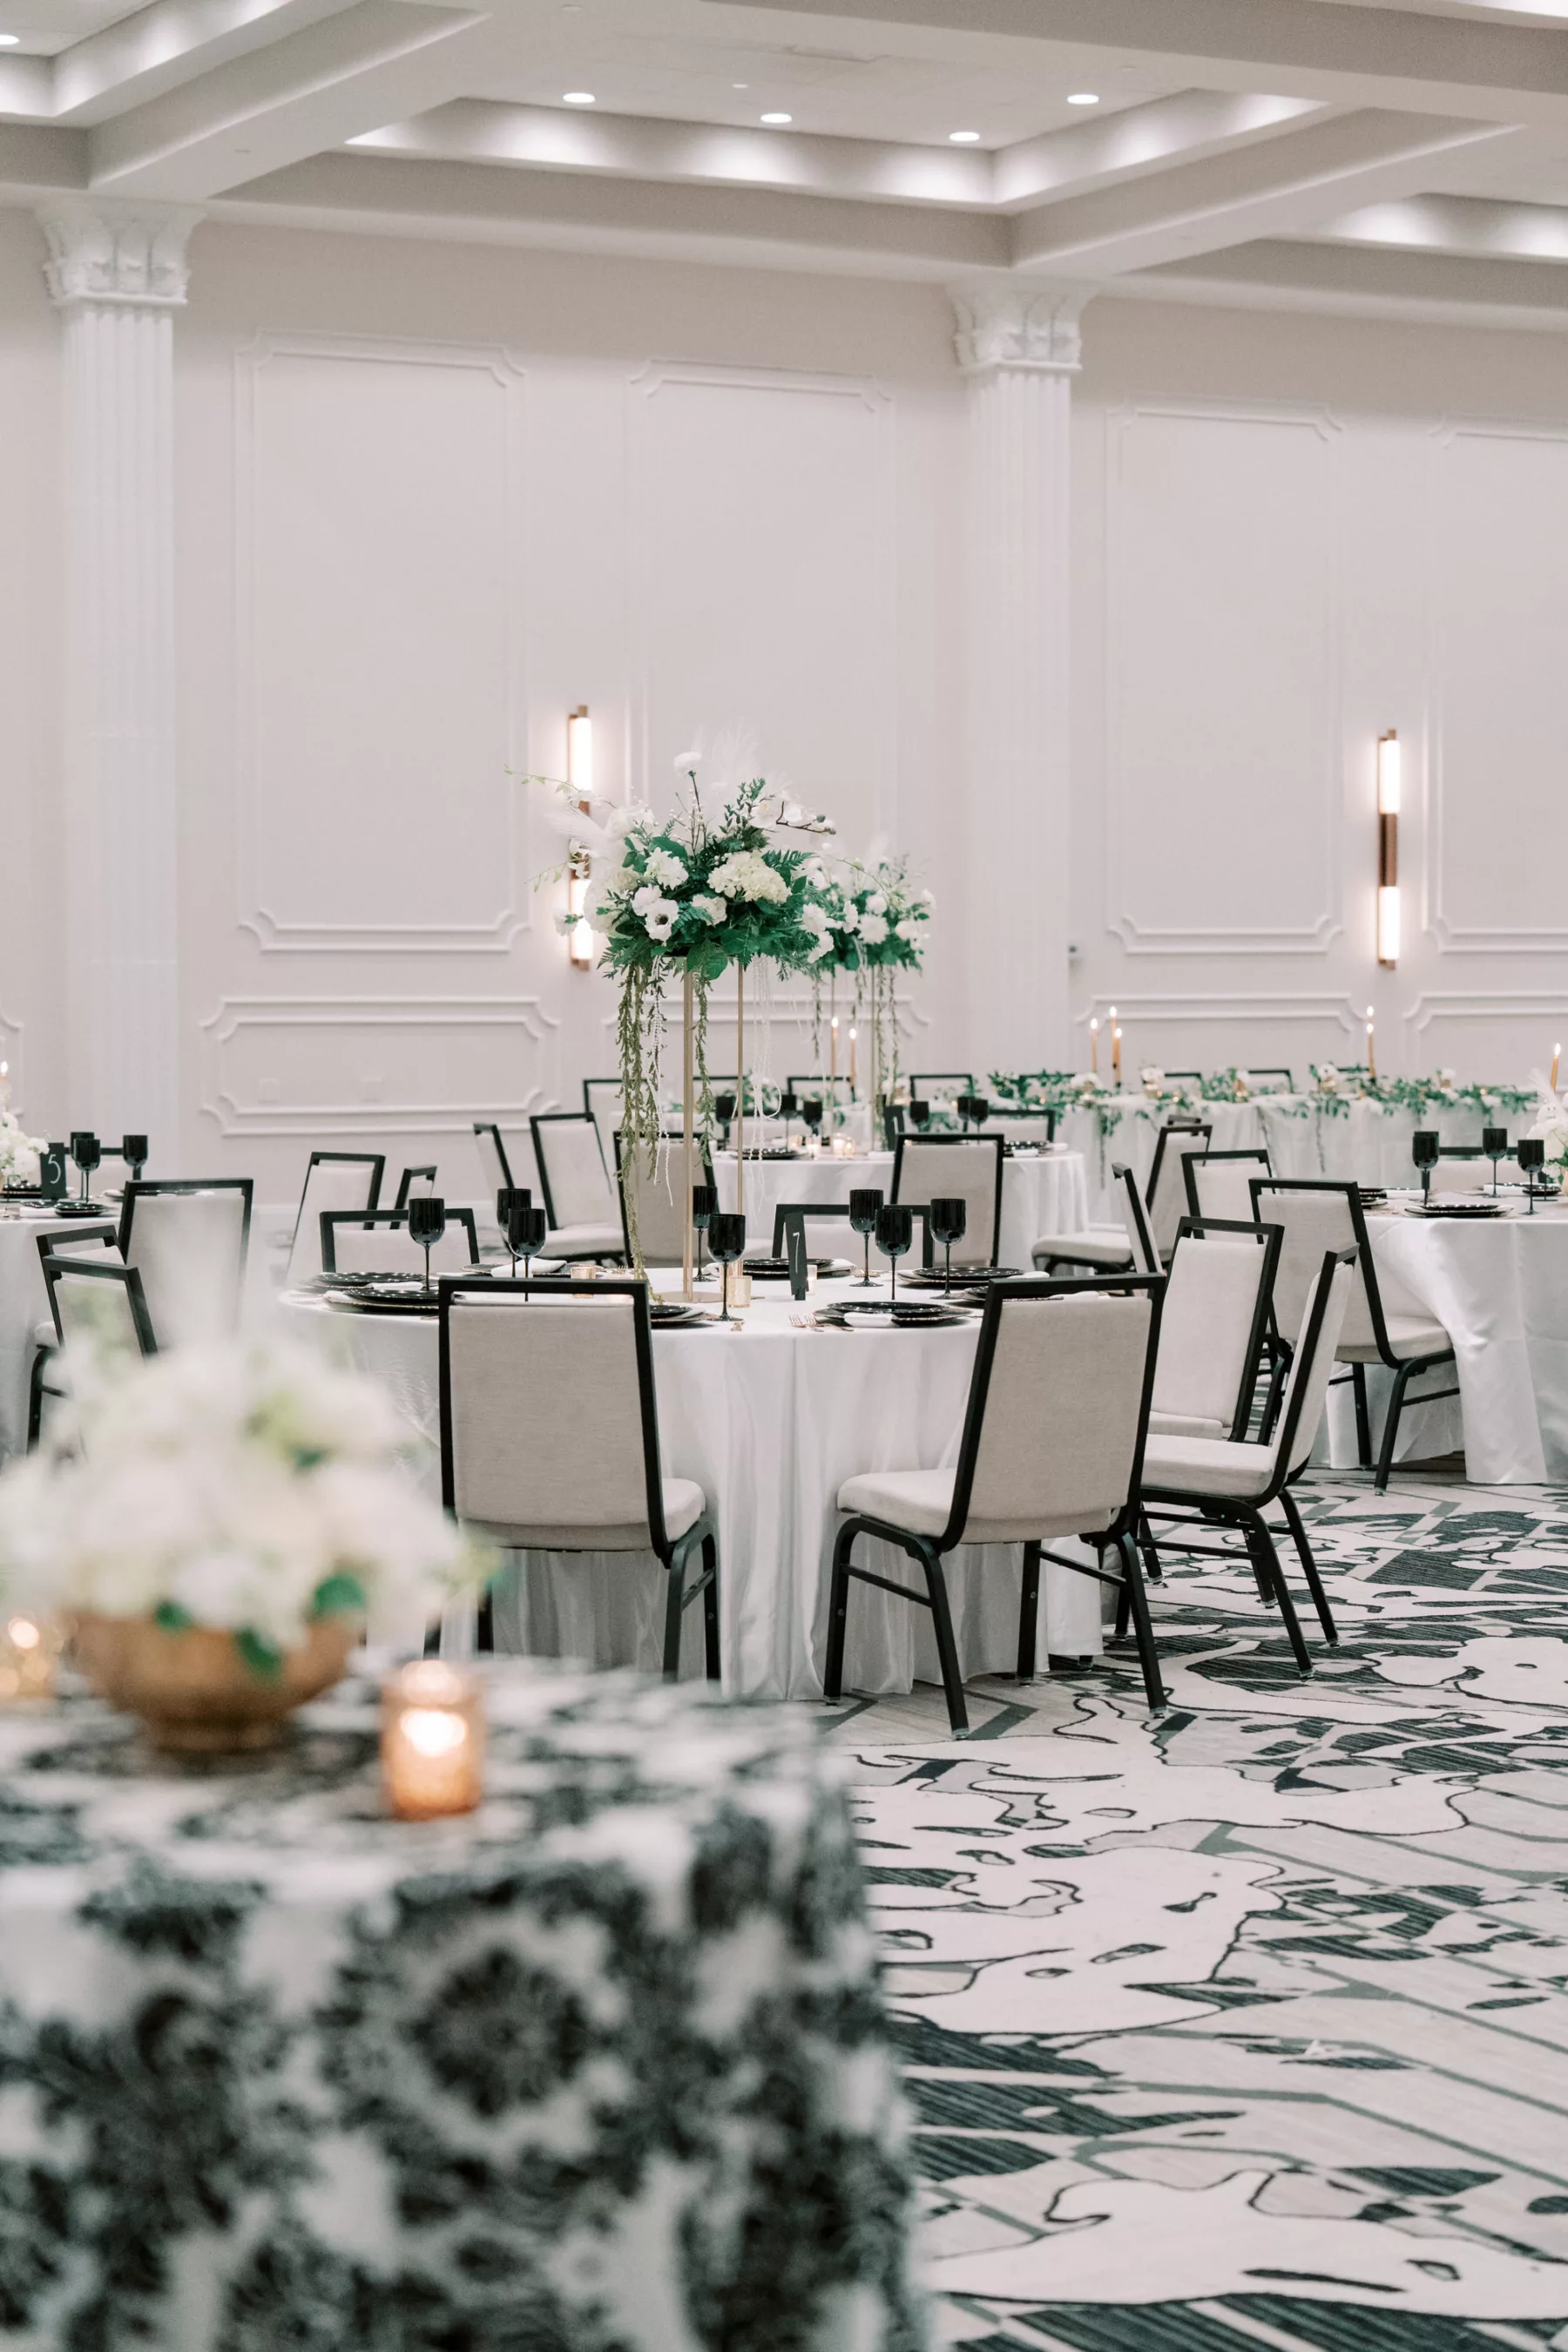 Black and Gold Modern Great Gatsby Floridan Ballroom Wedding Reception Inspiration | Tampa Bay Event Venue Hotel Flor